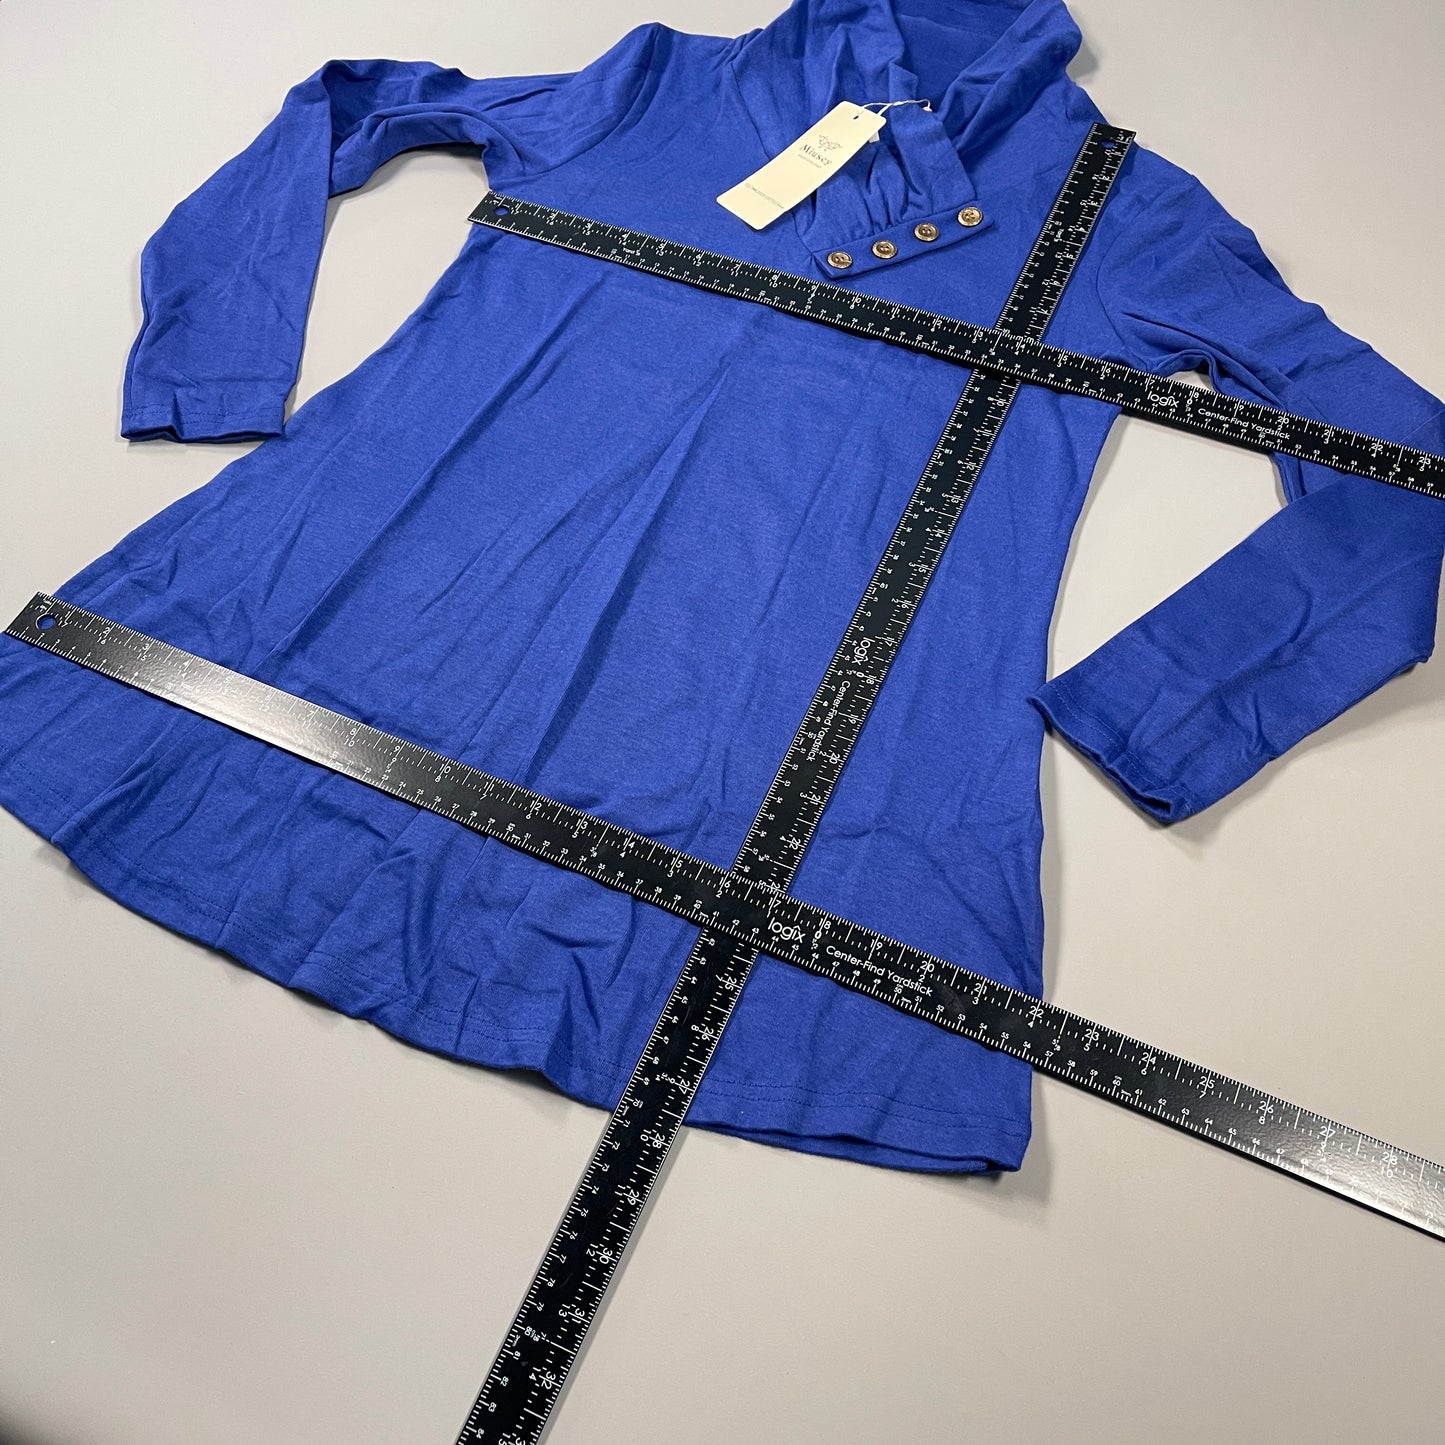 MIUSEY Long Sleeve Cowl Neck Tunic Top Blouse Women's Sz S Blue 20807 (New)